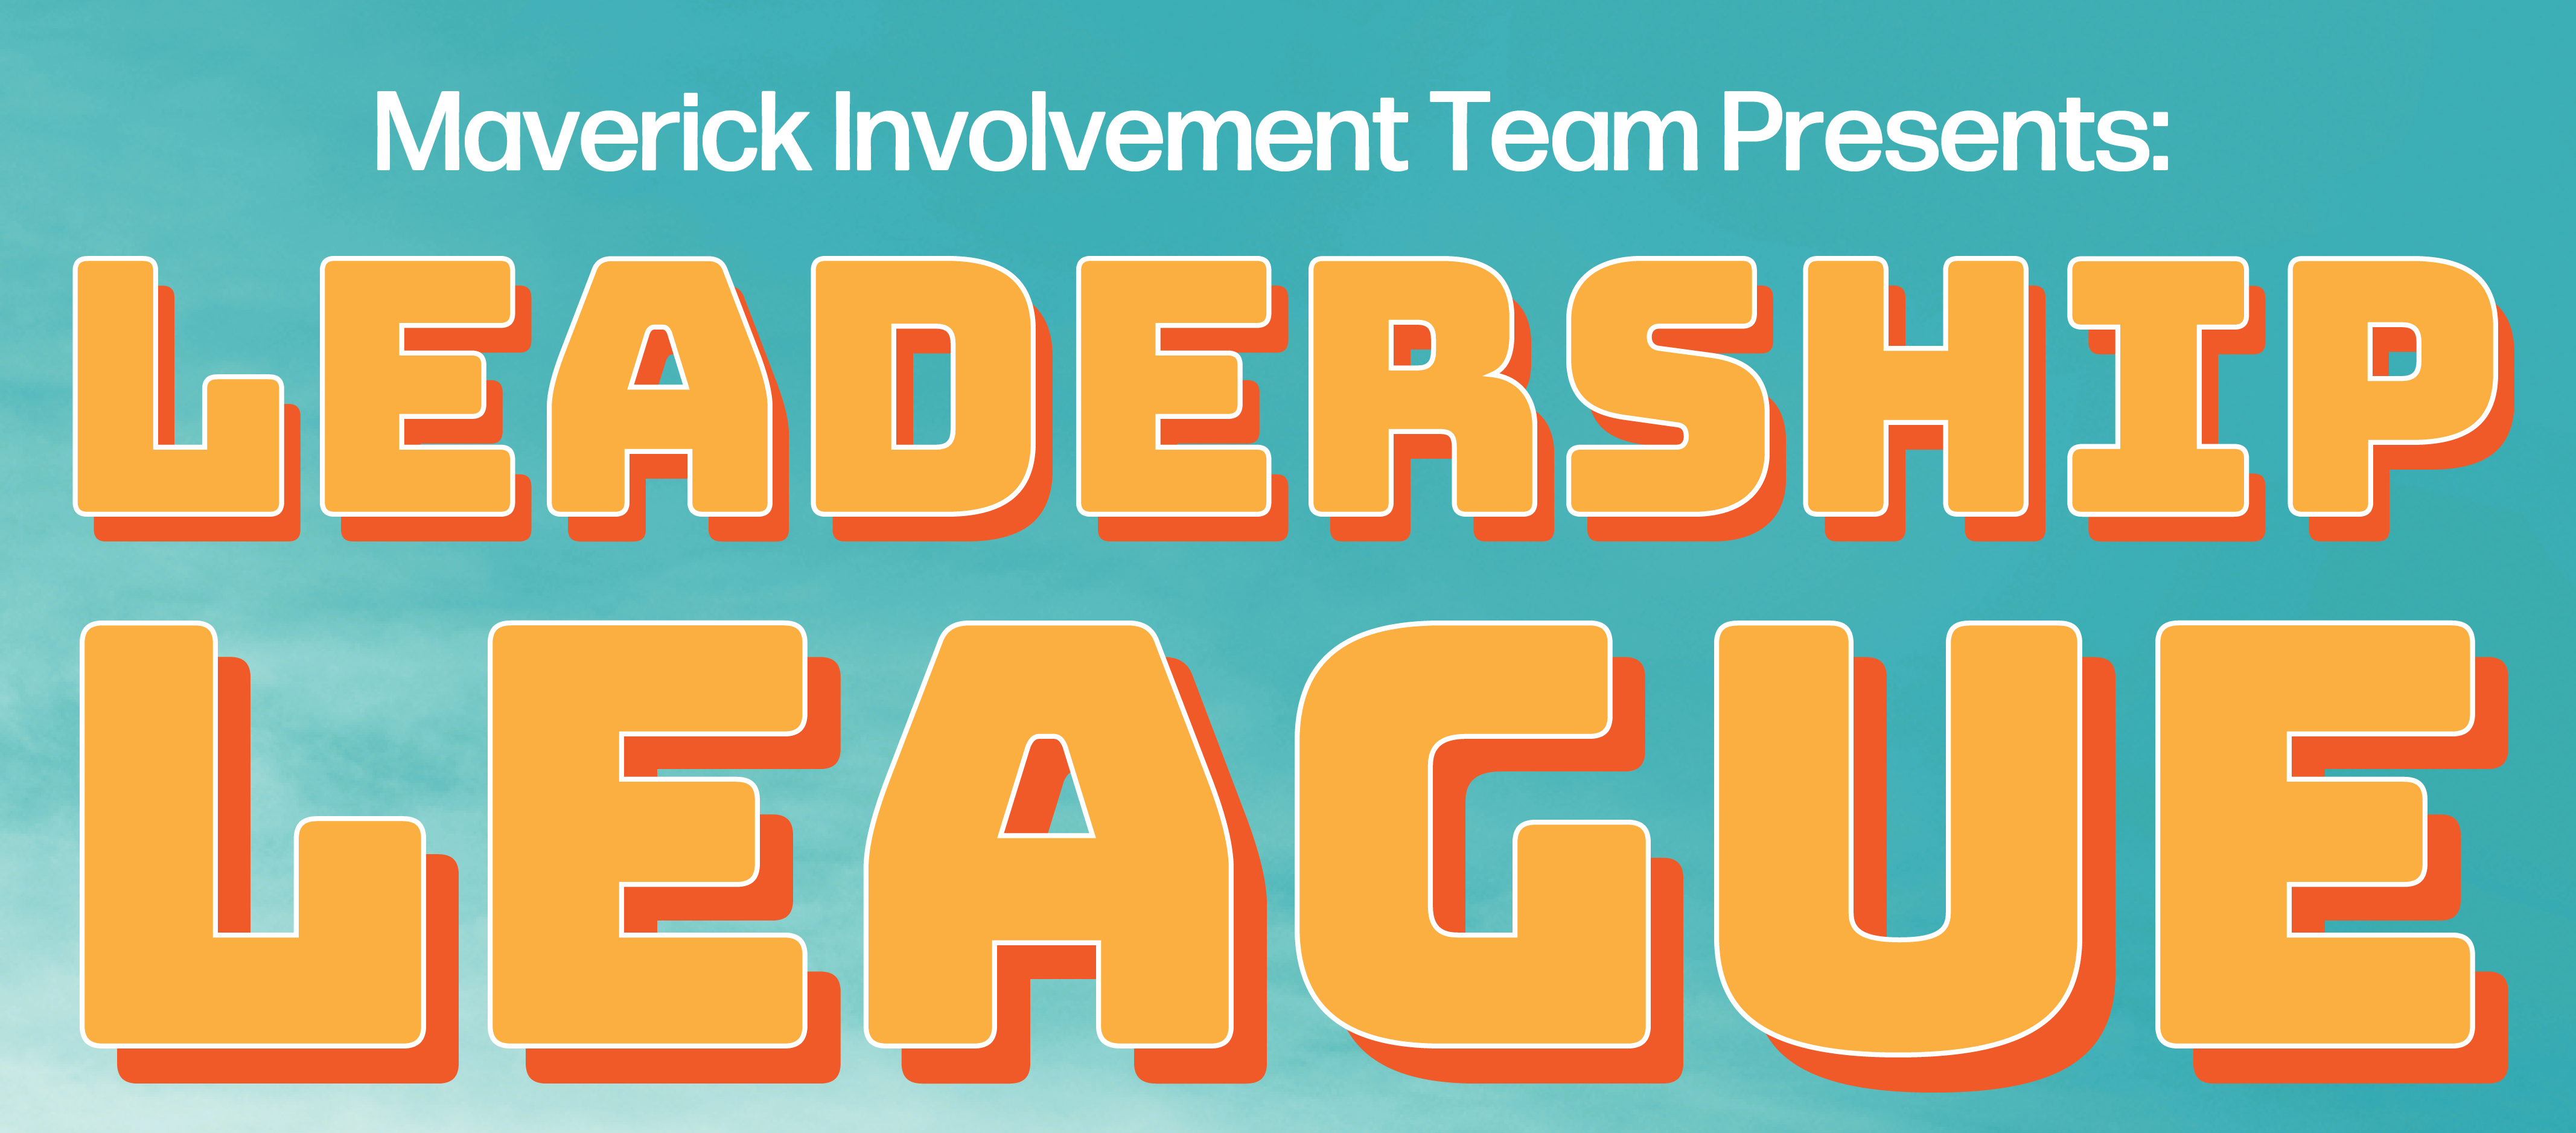 Maverick Involvement Team presents: Leadership League